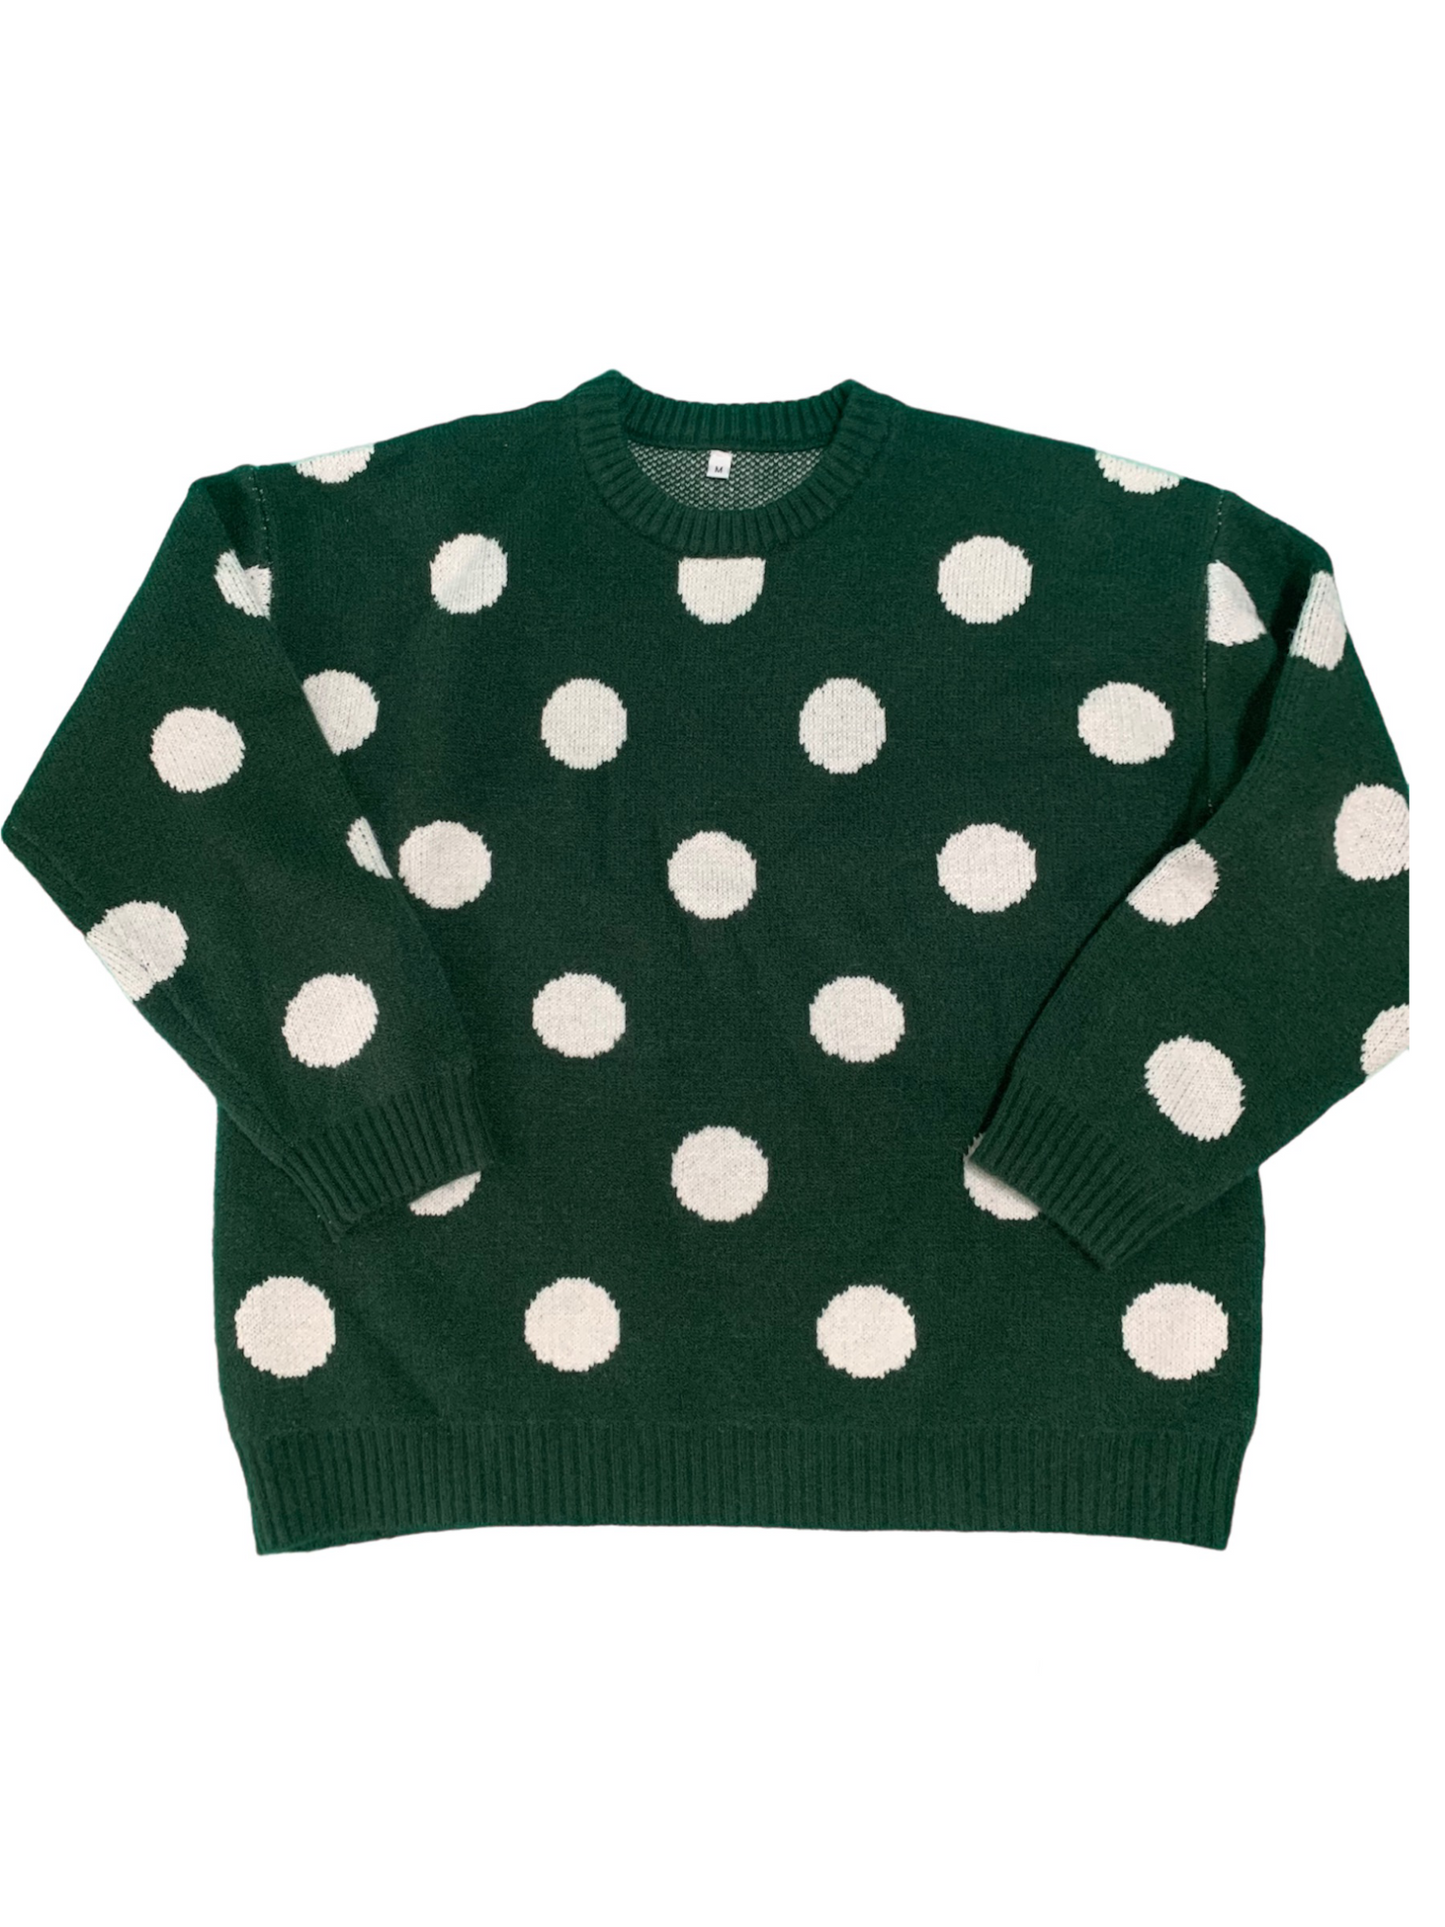 Polkadot Knit Pullover - Green